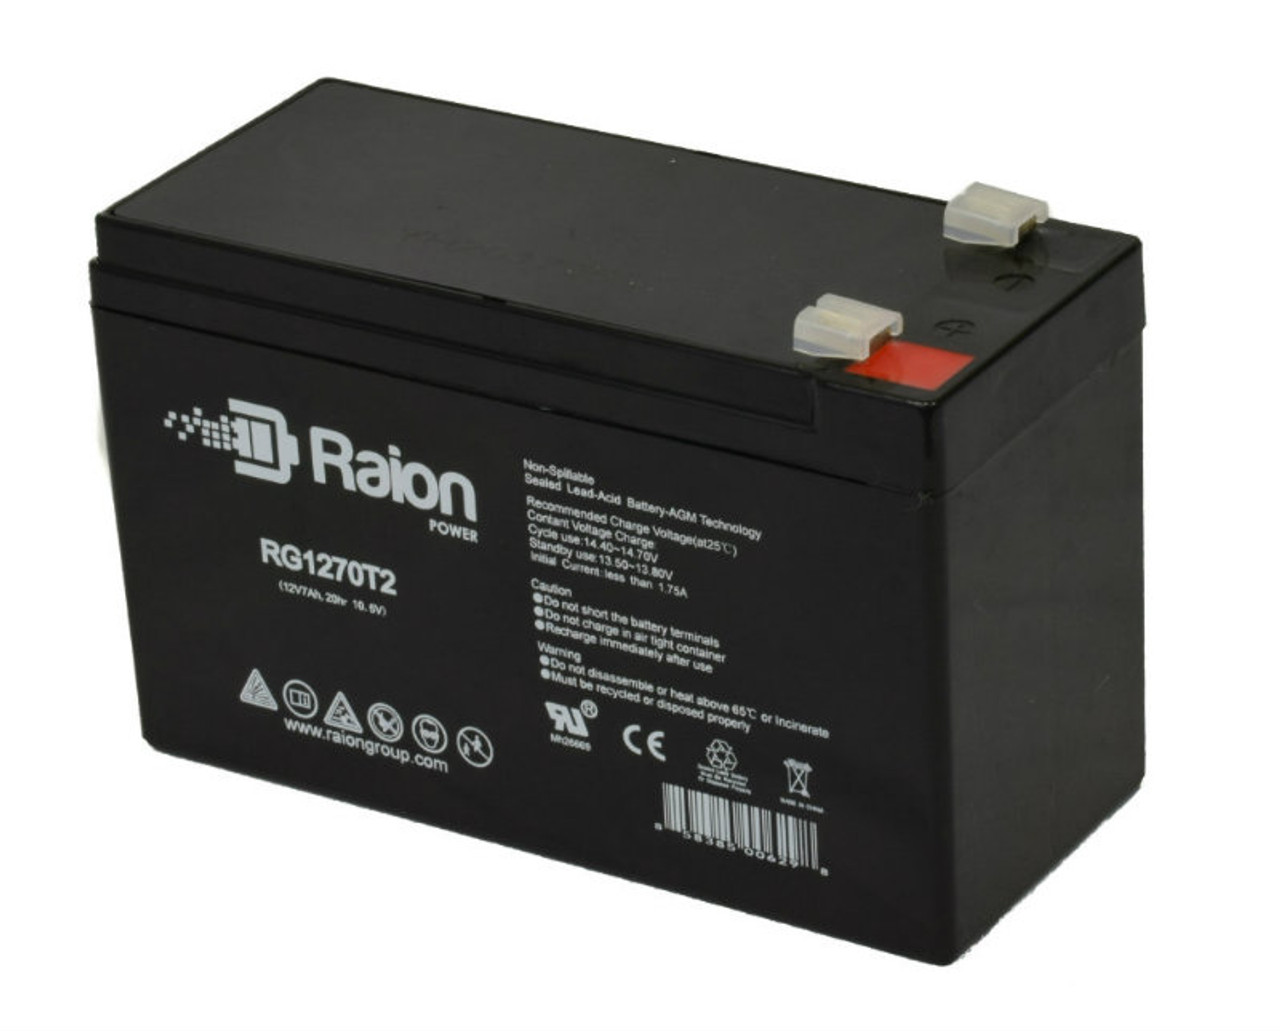 Raion Power RG1270T2 12V 7Ah AGM Battery for BHM Medical ERLI600 Patient Lift